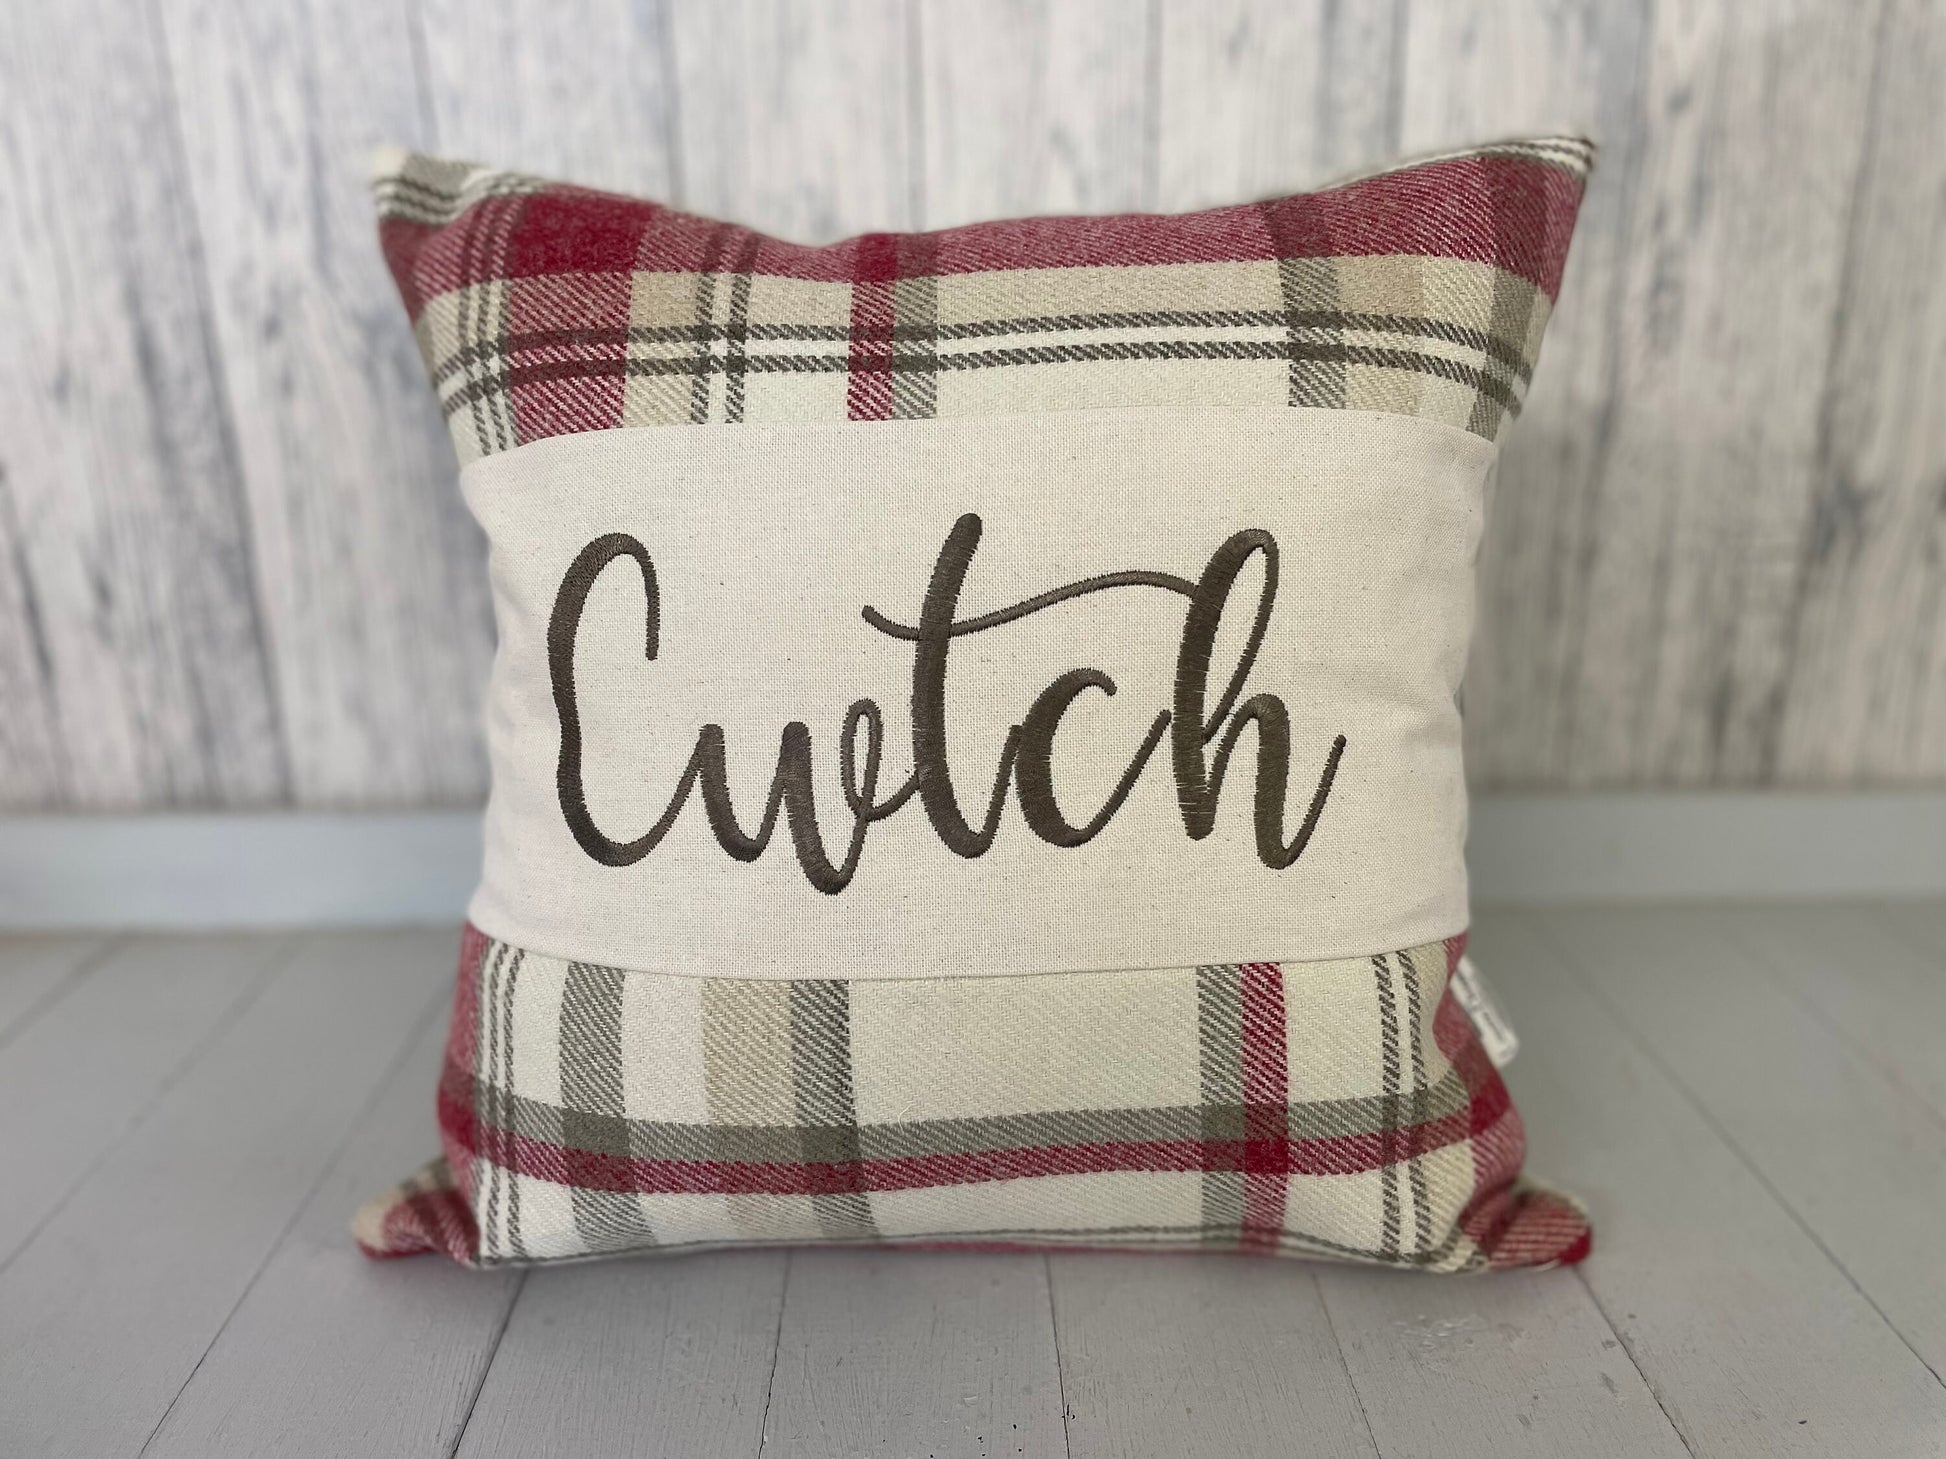 16" Wool Touch Cwtch Cushion- Cwtch Panel Cushion, Welsh Cushion